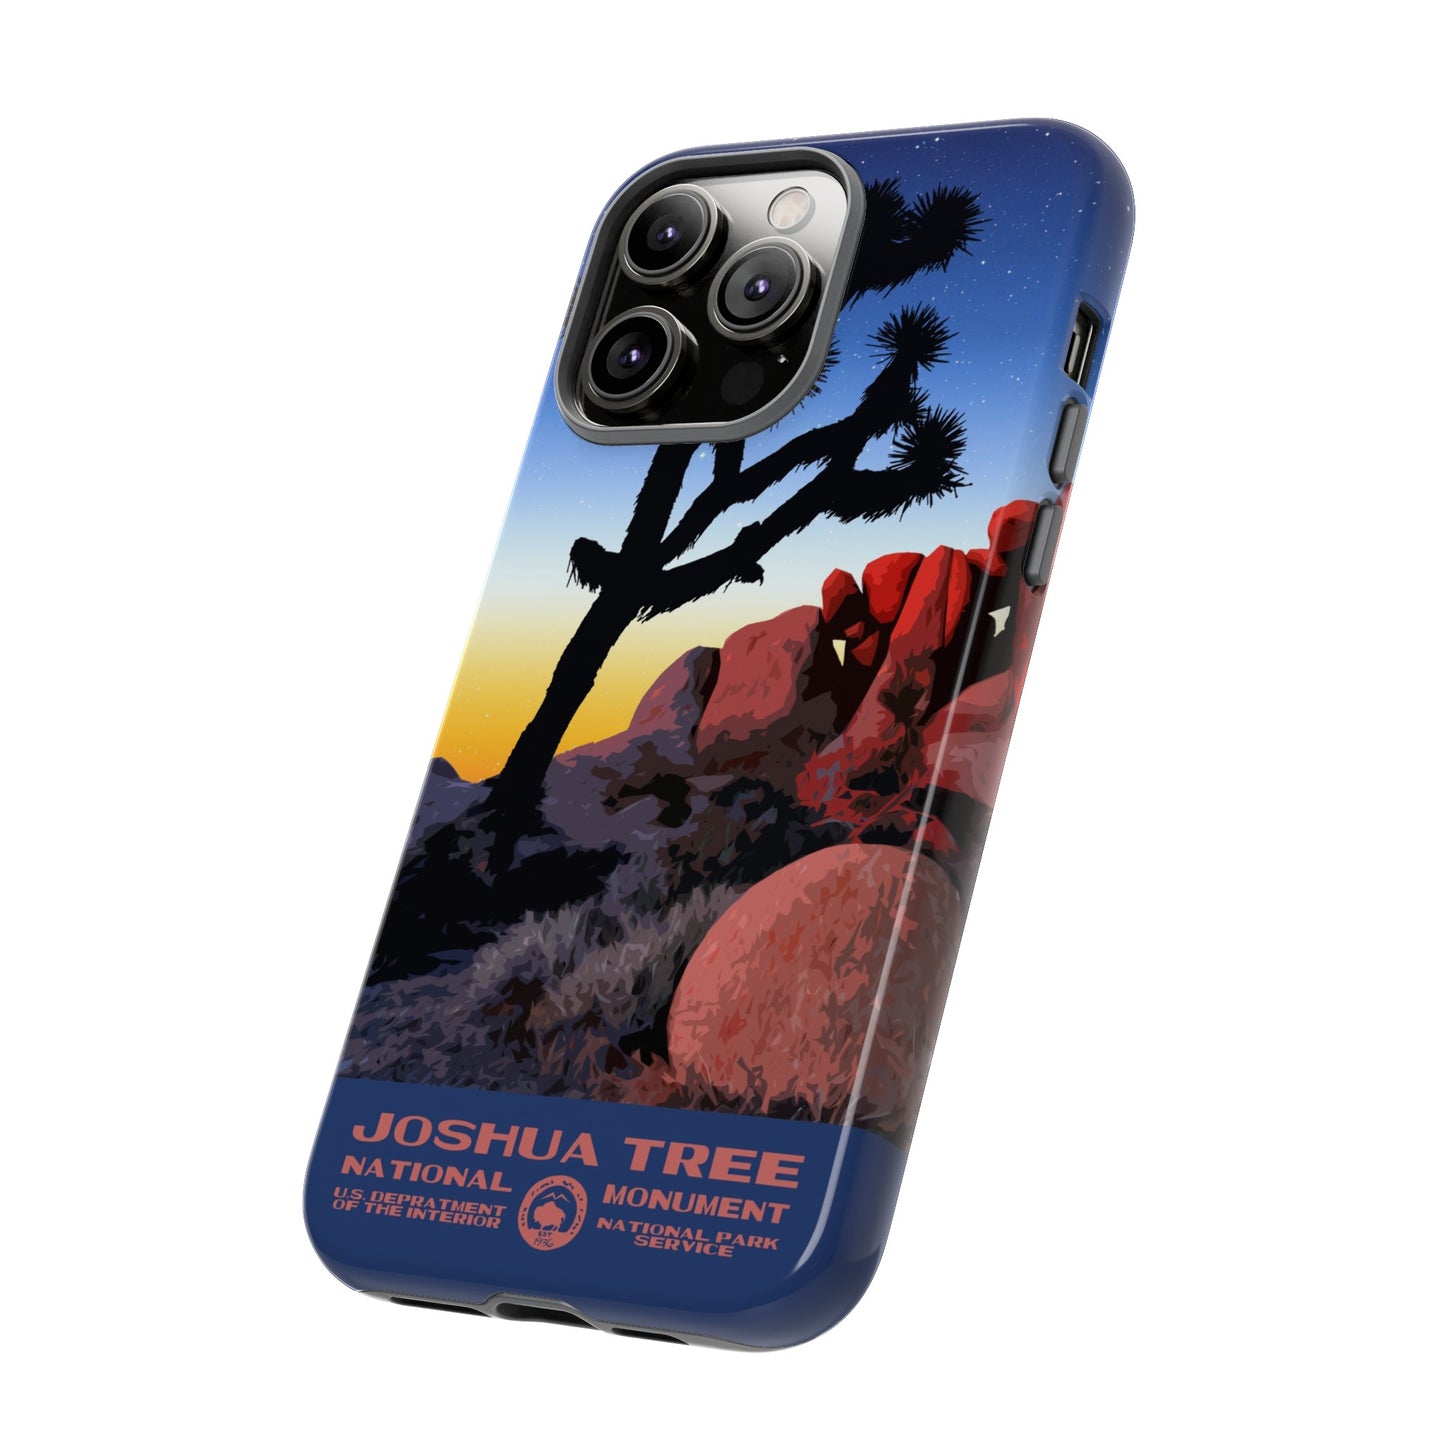 Joshua Tree National Park iPhone Case - Night